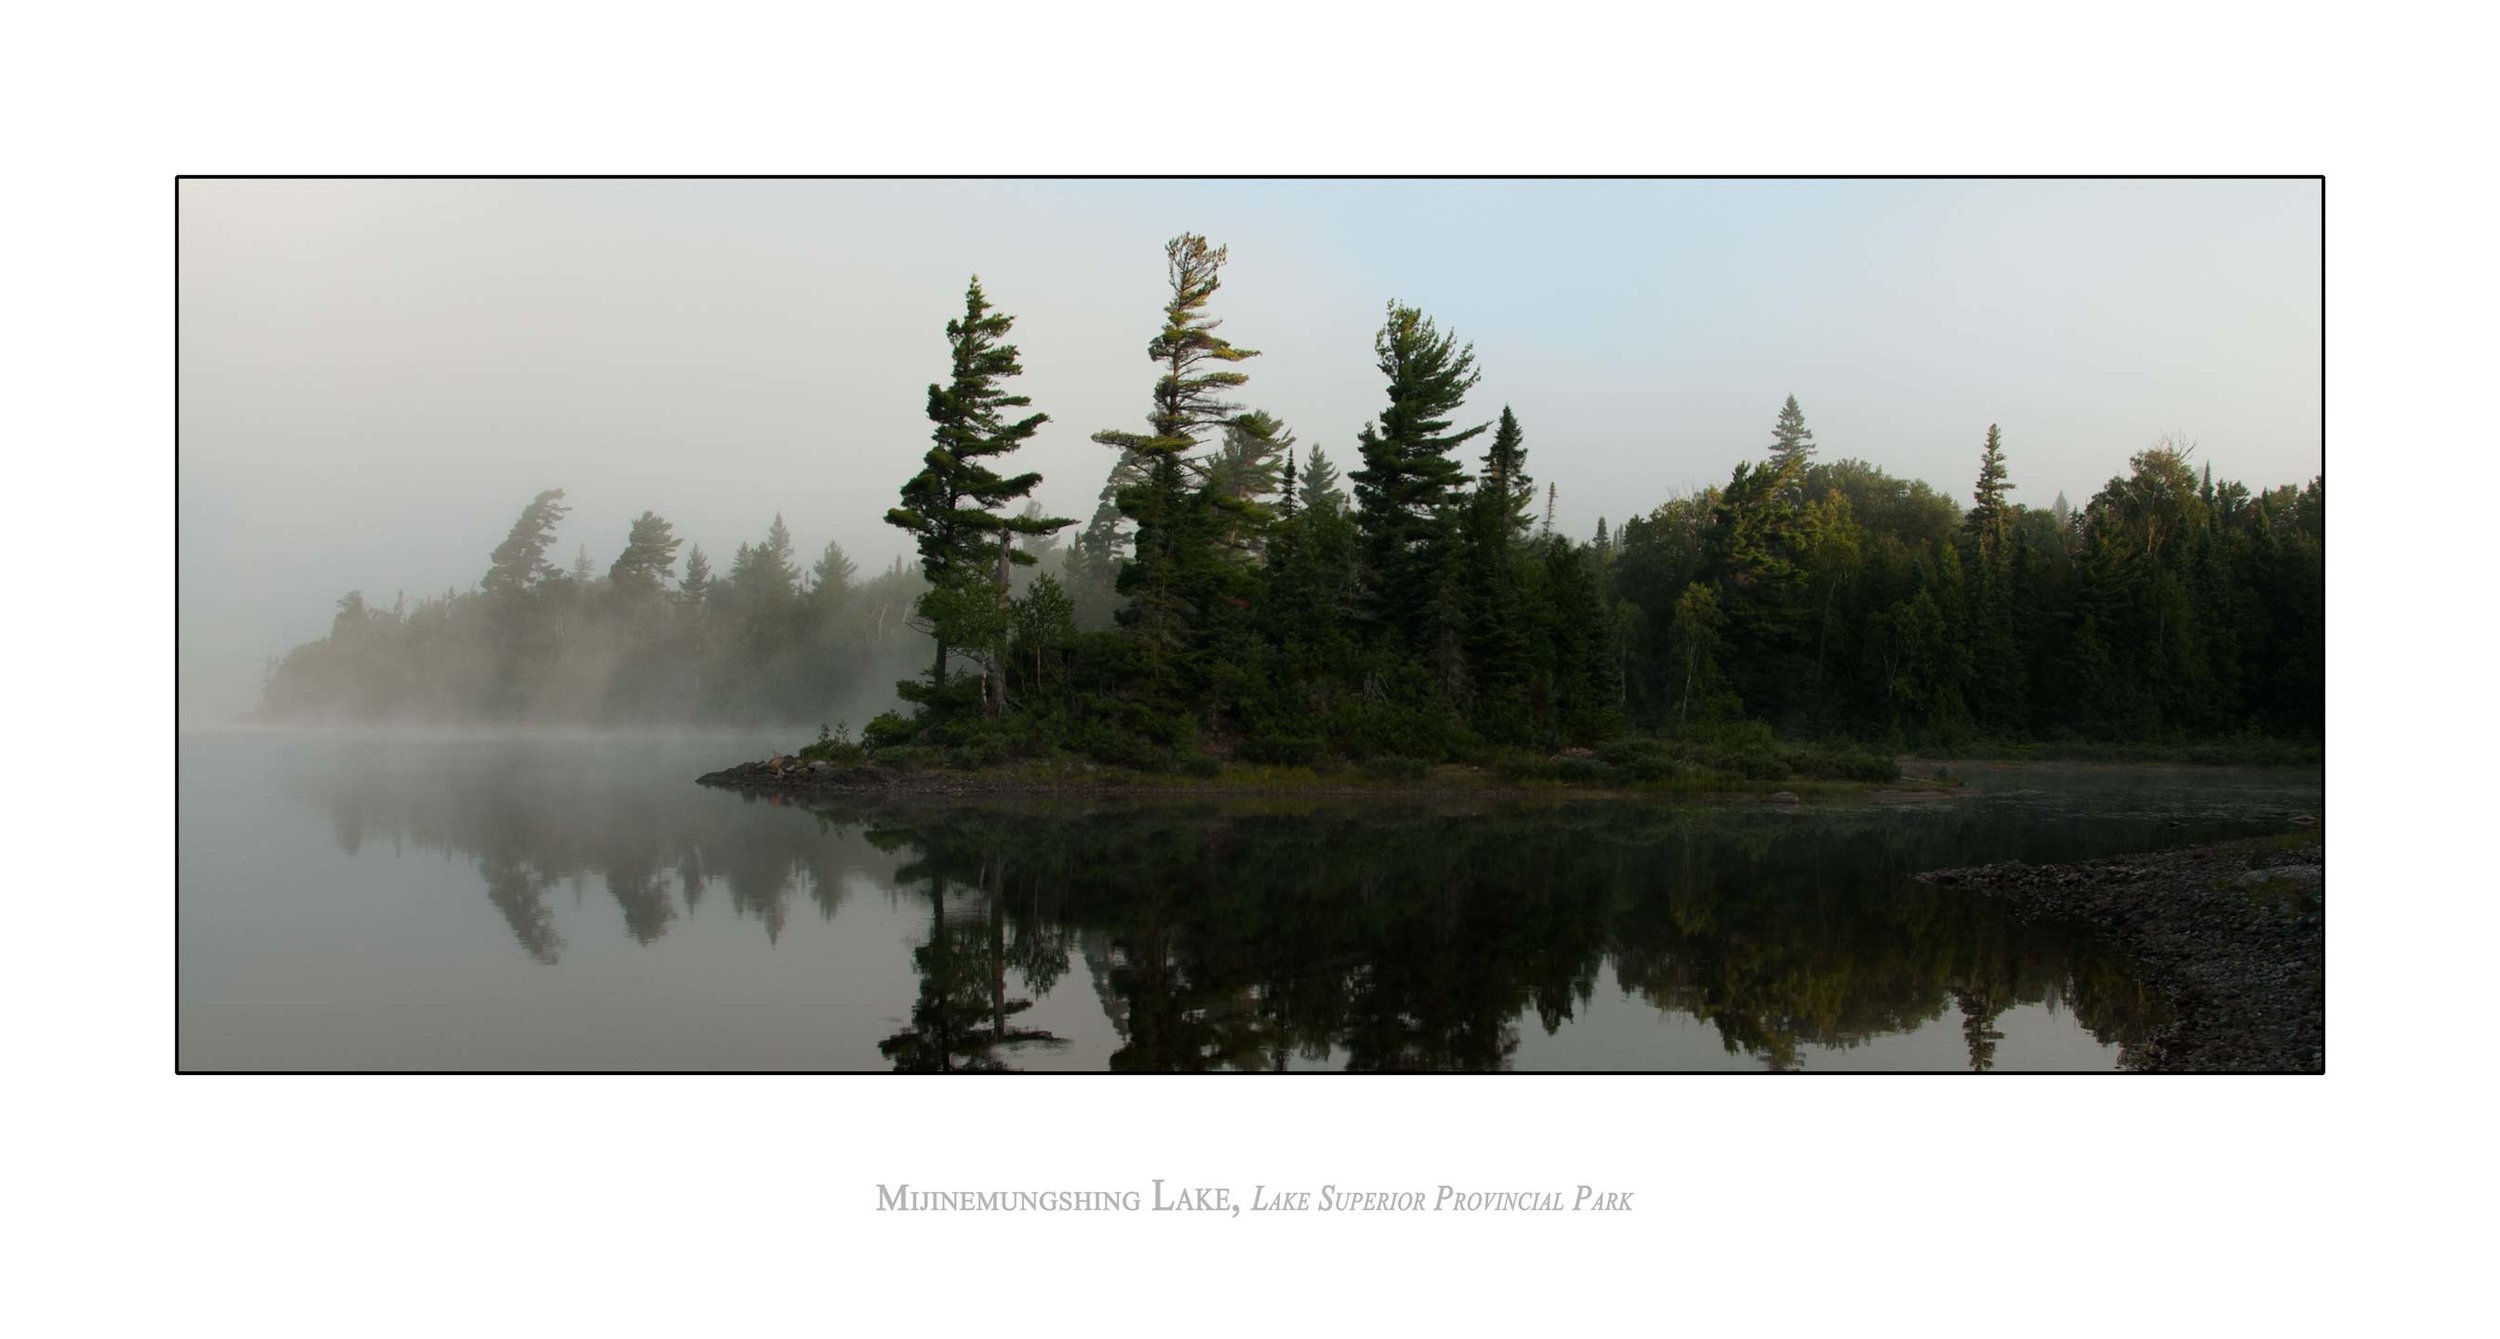 LakeSuperior-morning.jpg